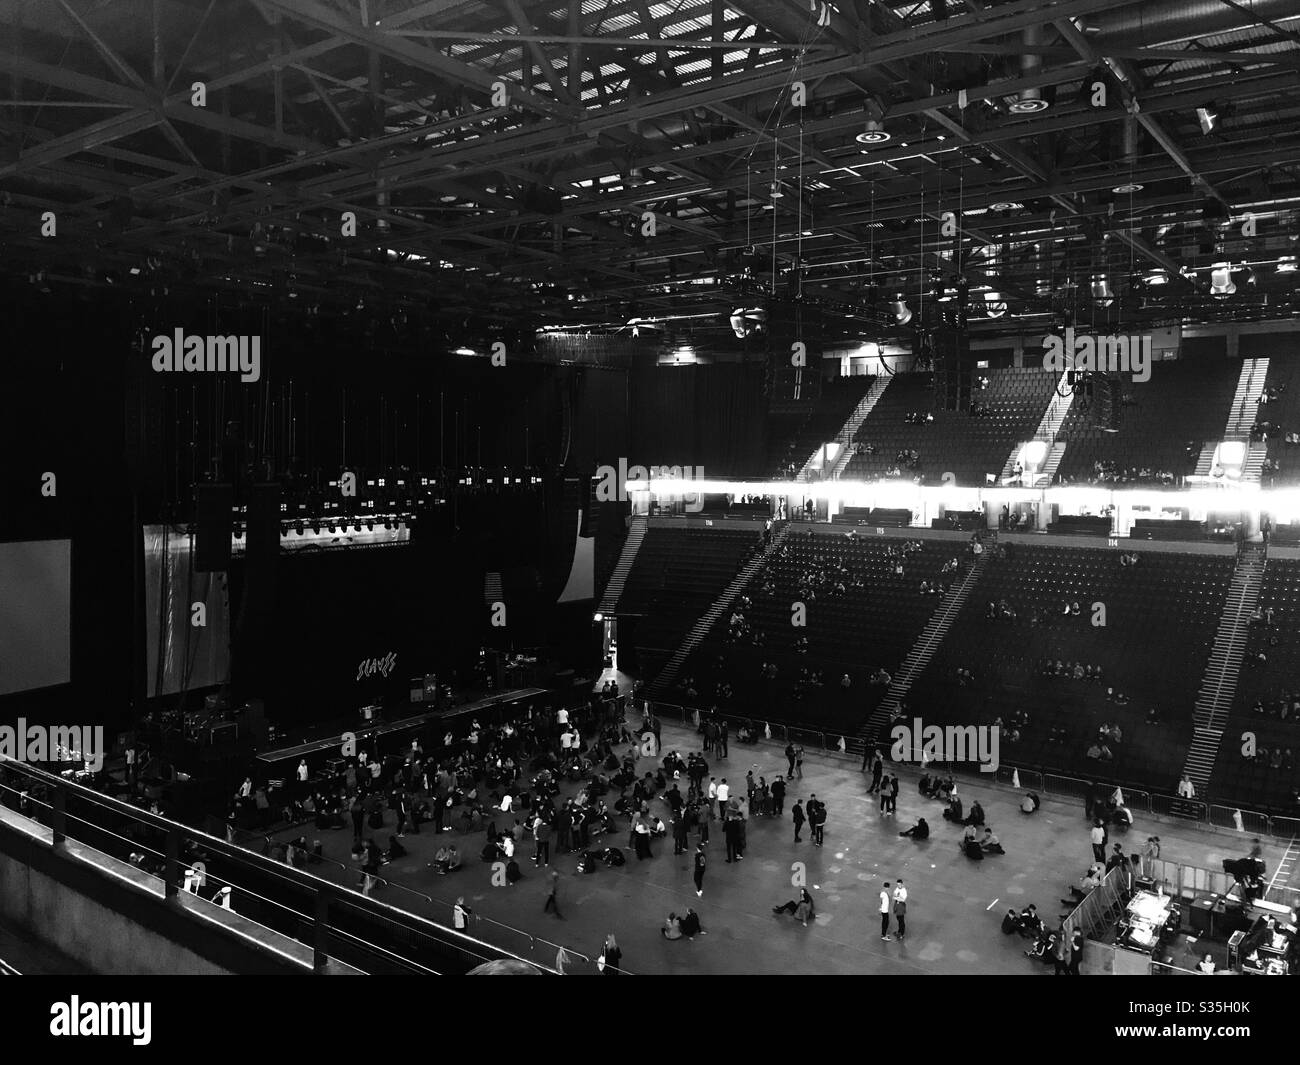 Concert arena Stock Photo